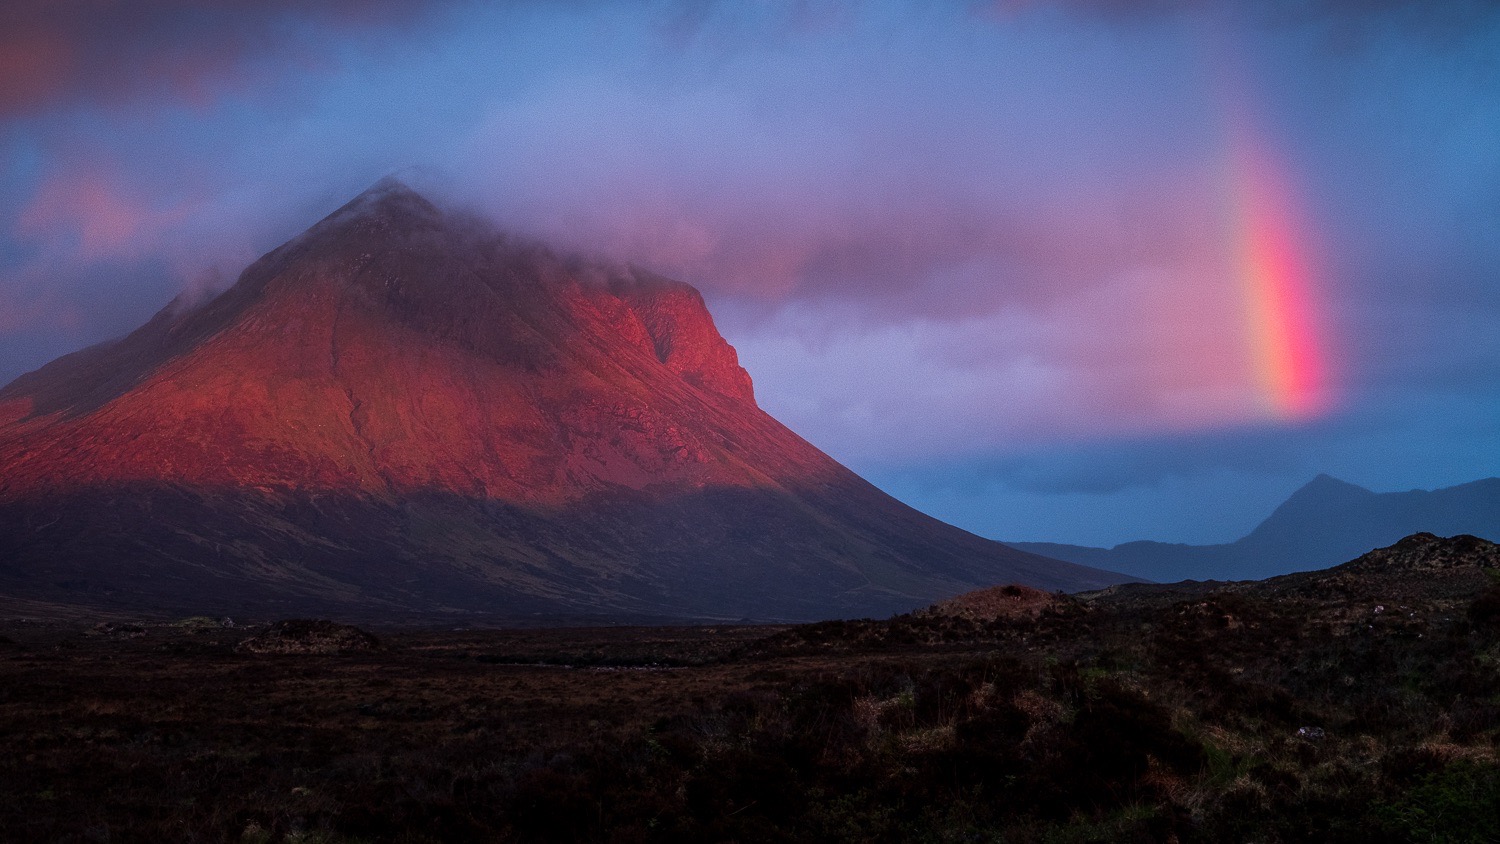 0050-scotland-tamron-le monde de la photo-paysage-20190509221322-compress.jpg